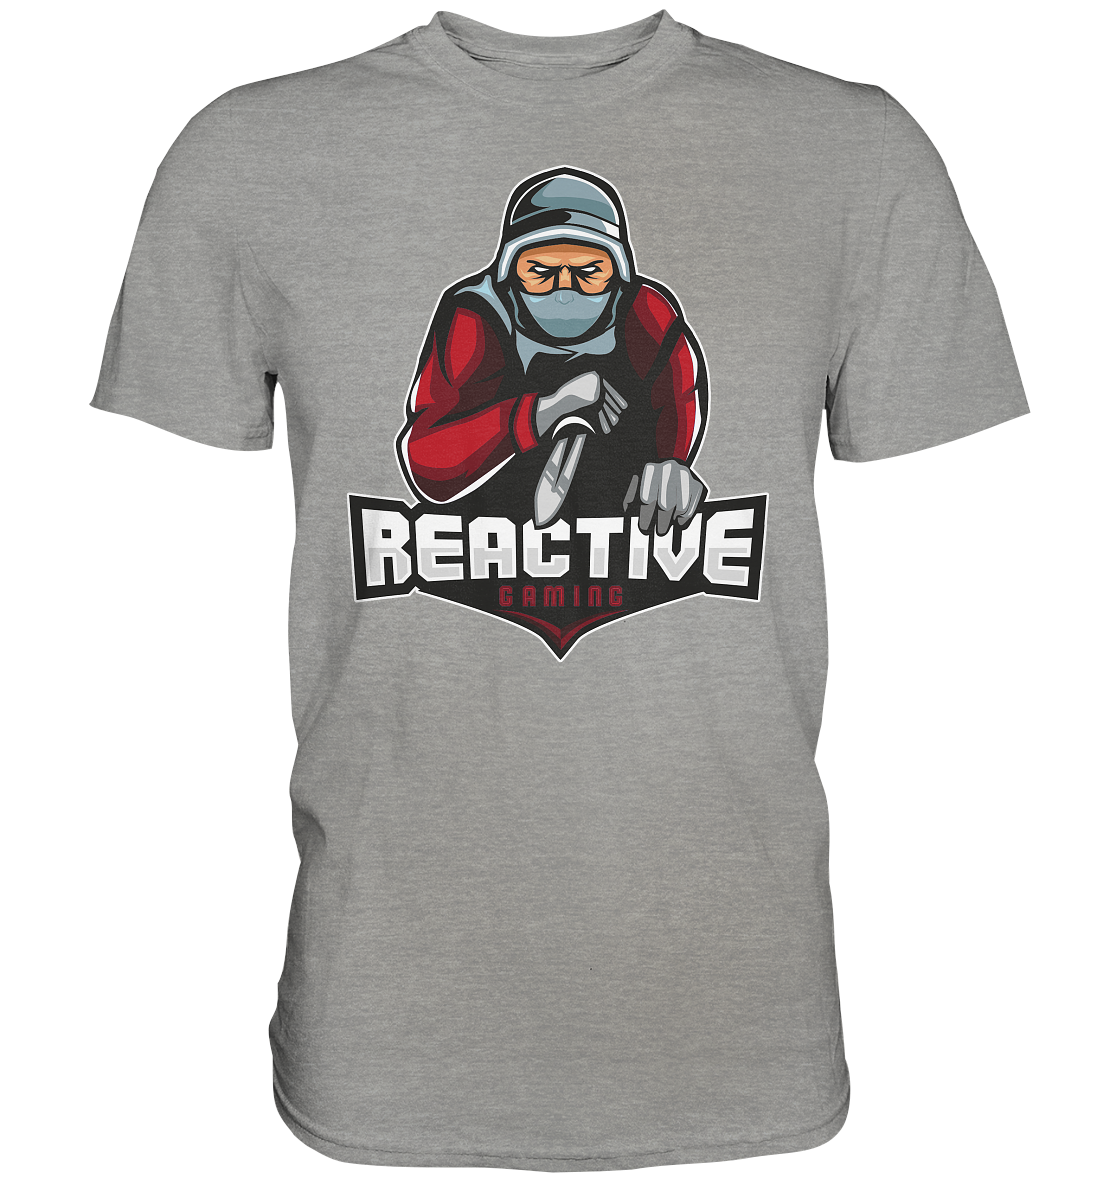 REACTIVE GAMING - Basic Shirt